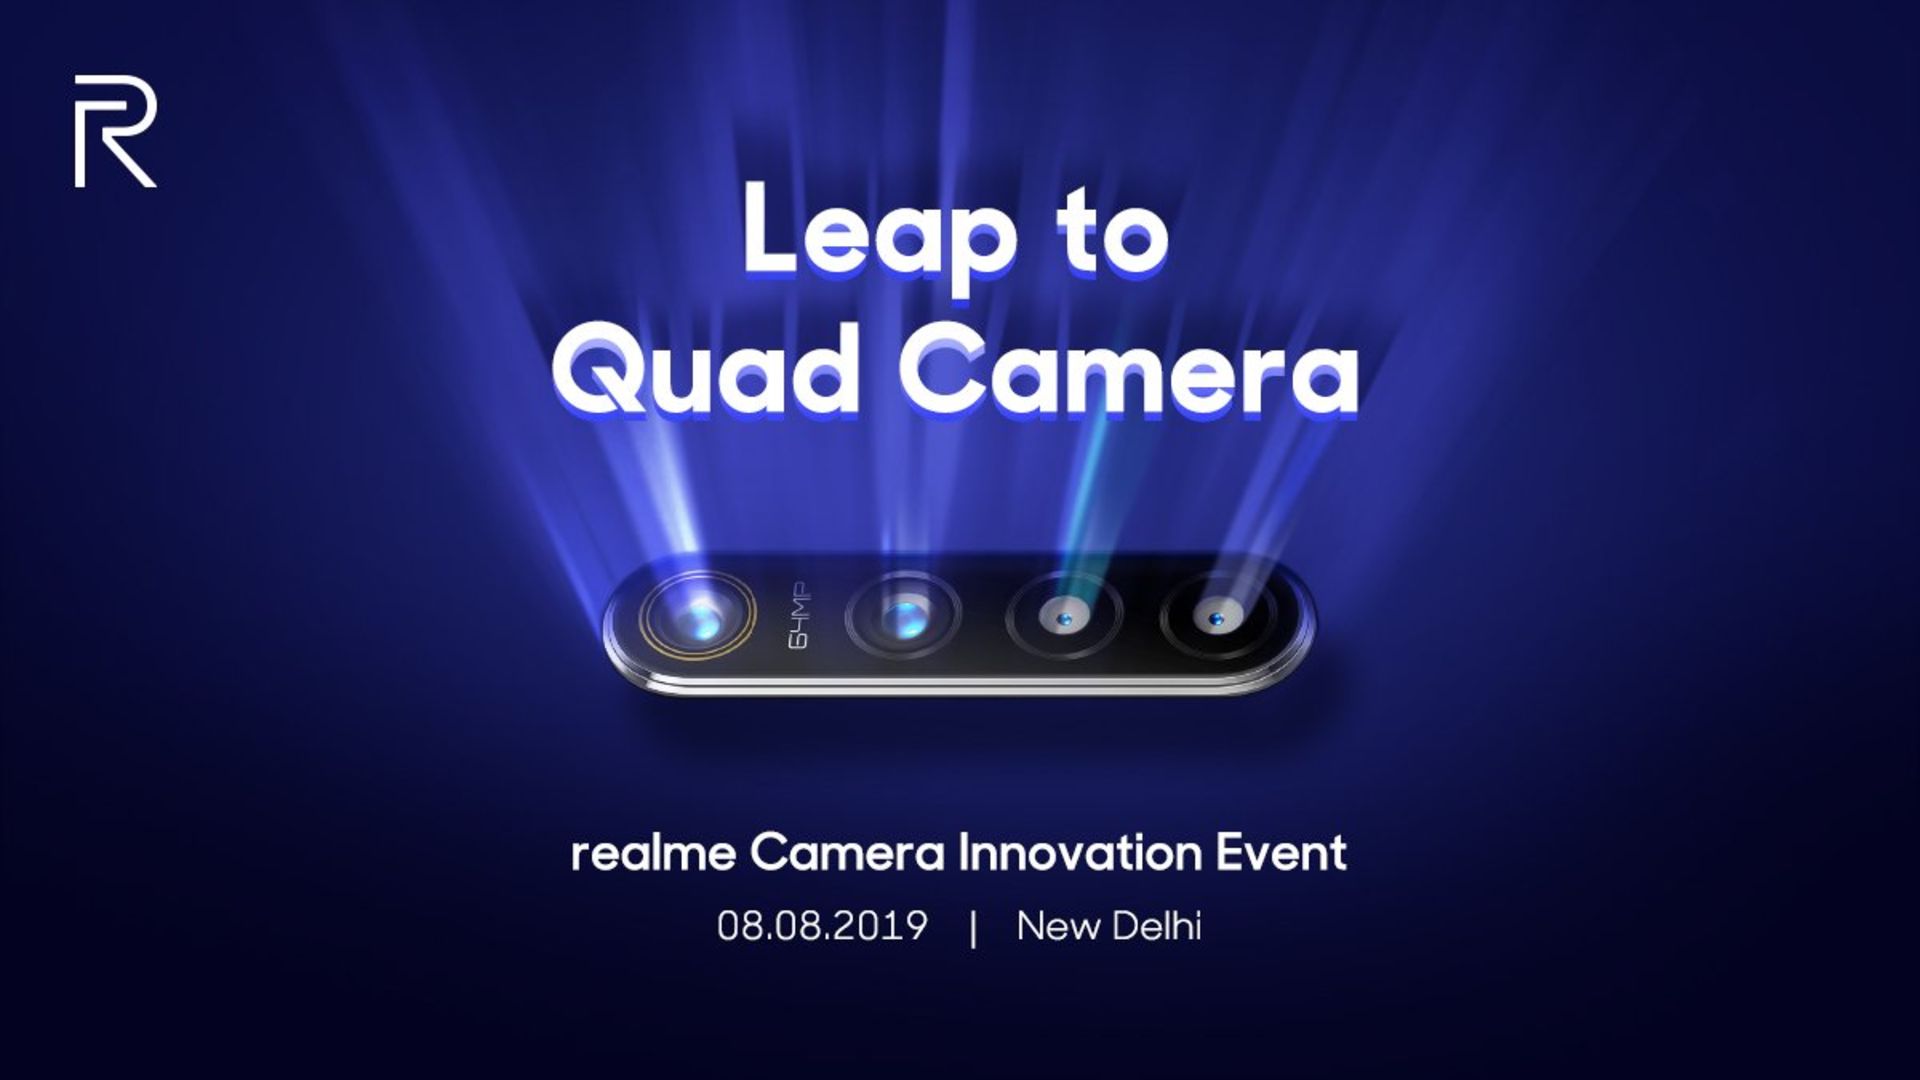 Realme's 64MP quad camera